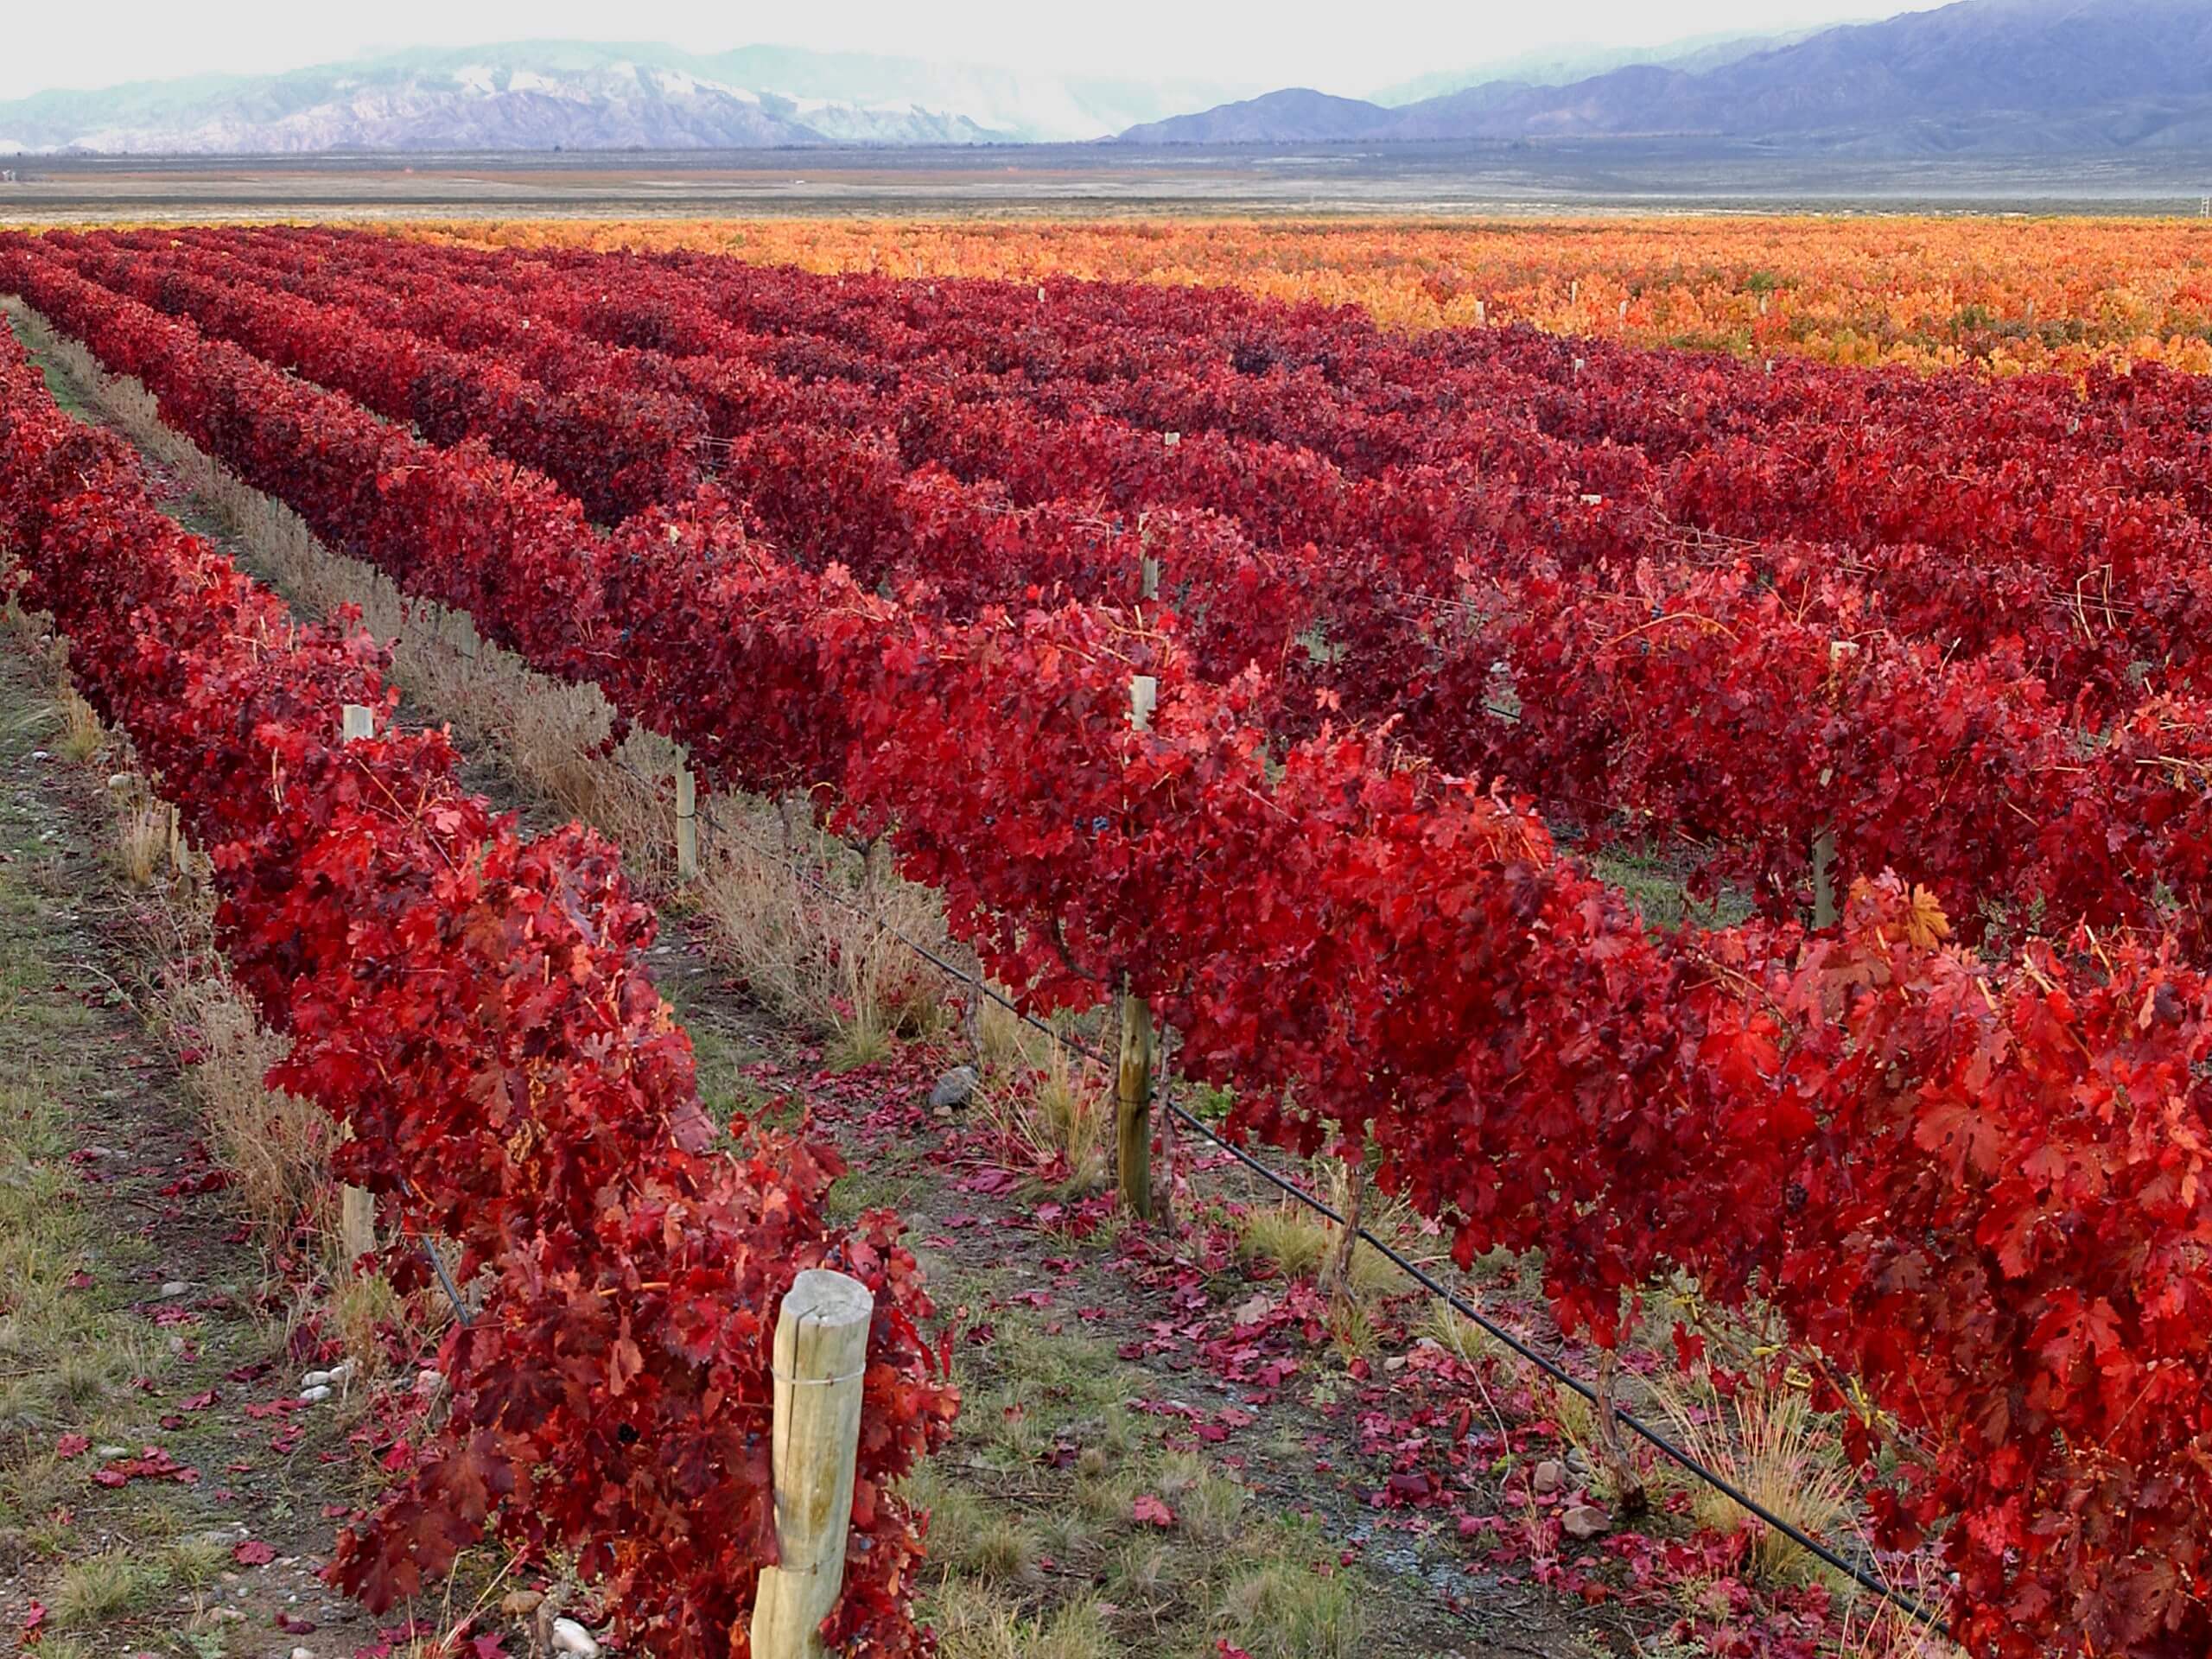 Red vineyard in Mendoza